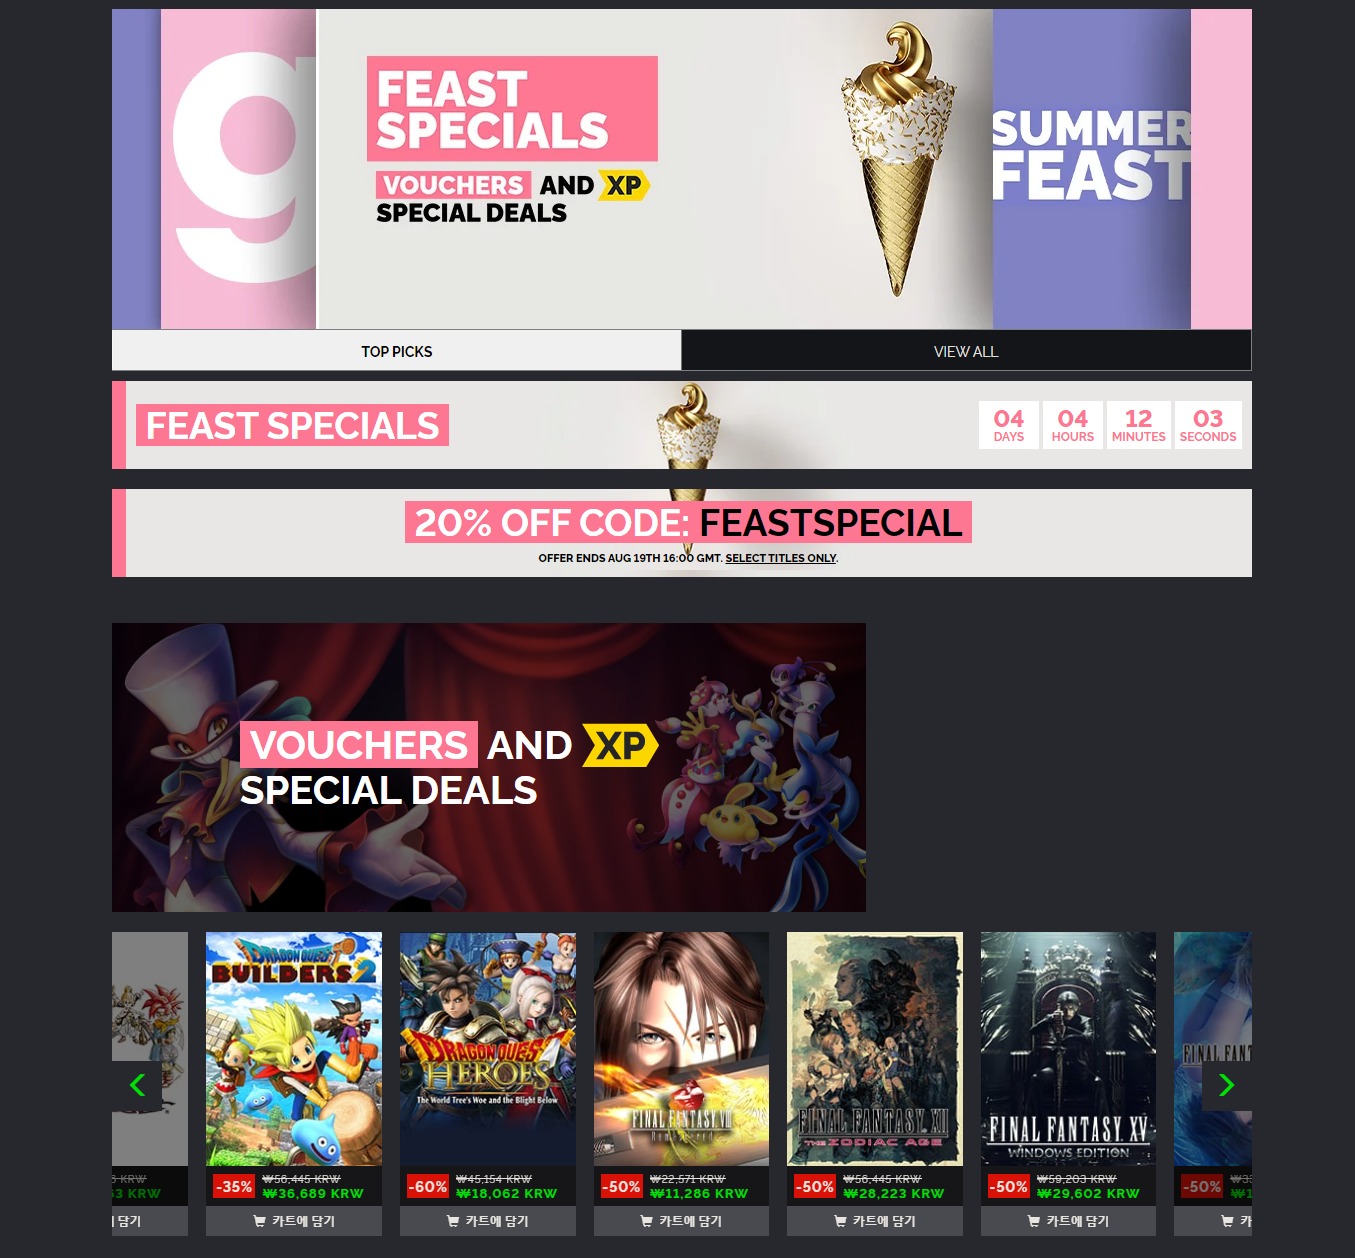 FireShot Capture 773 - Feast Specials - Summer Sale at Green Man Gaming - PC Game Keys_ - www.greenmangaming.com.jpg